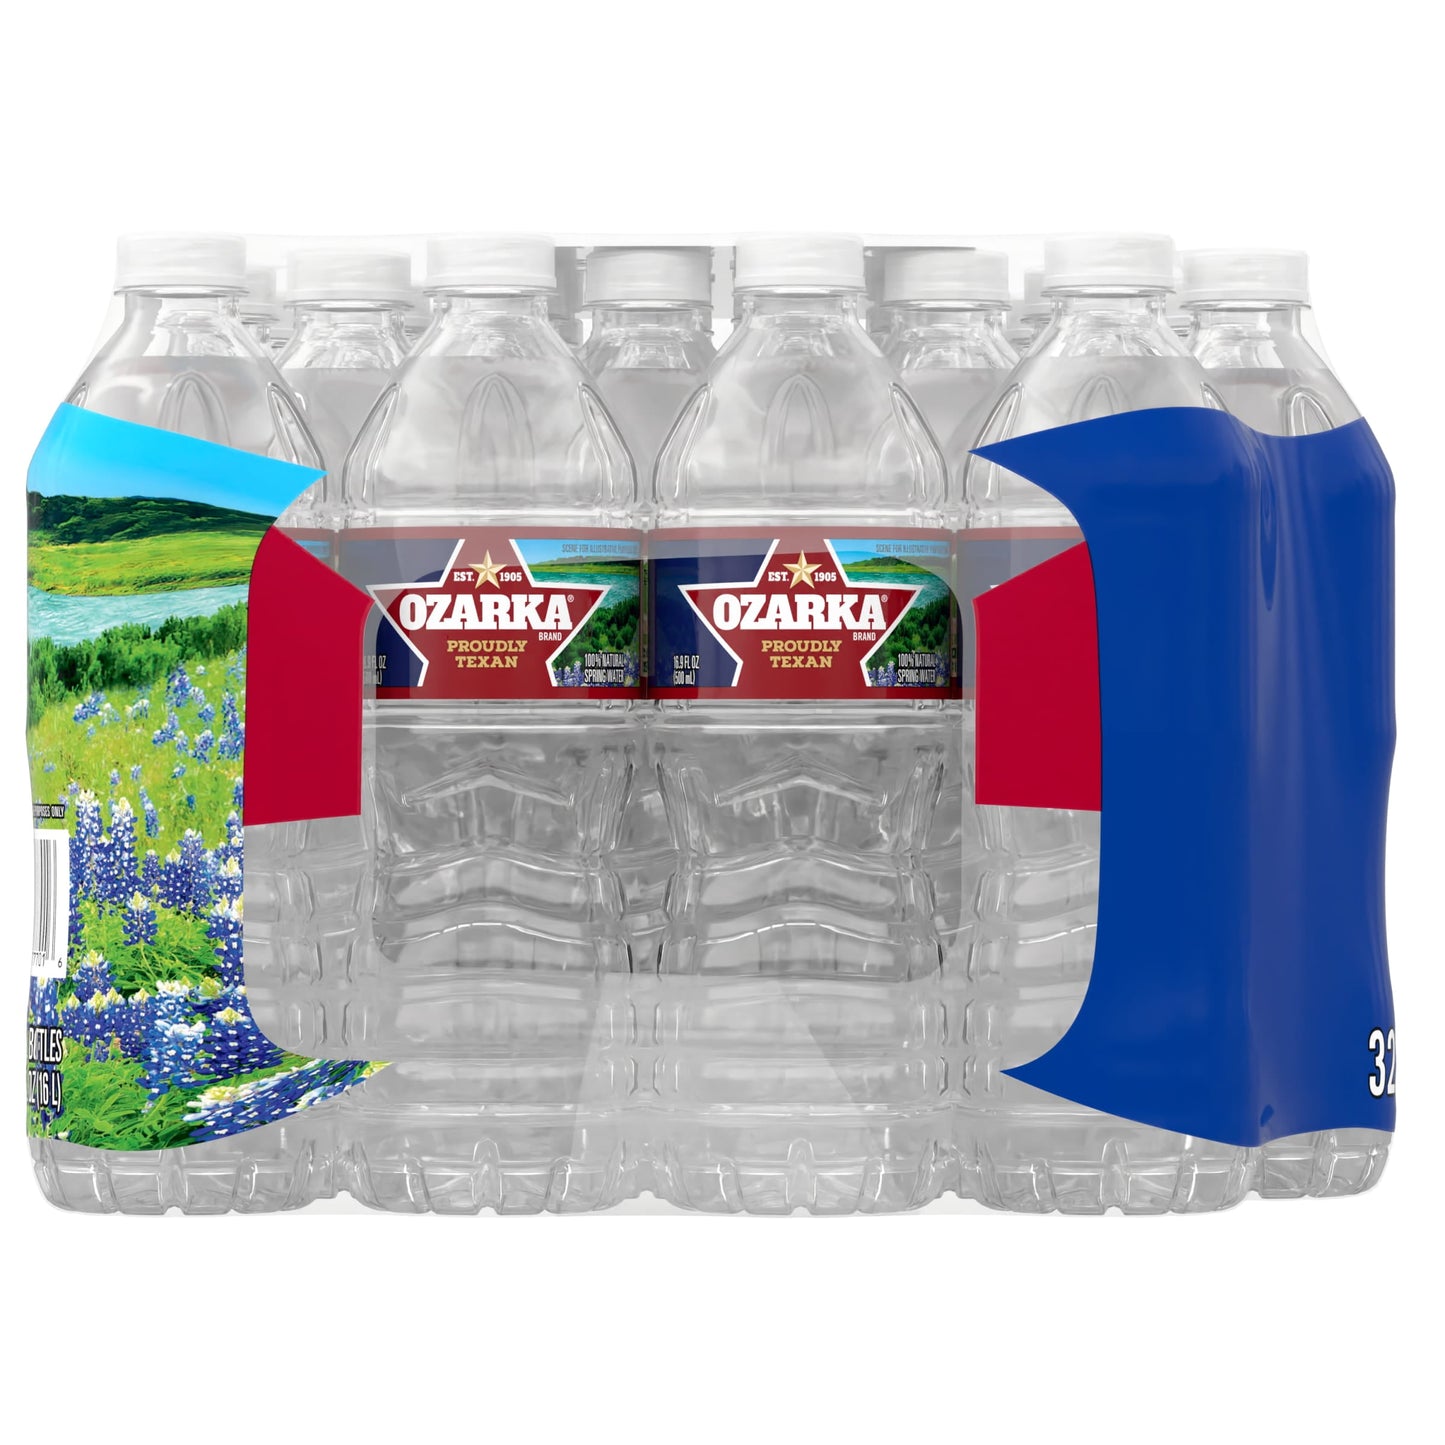 OZARKA Brand 100% Natural Spring Water, 16.9-ounce plastic bottles (Pack of 32)